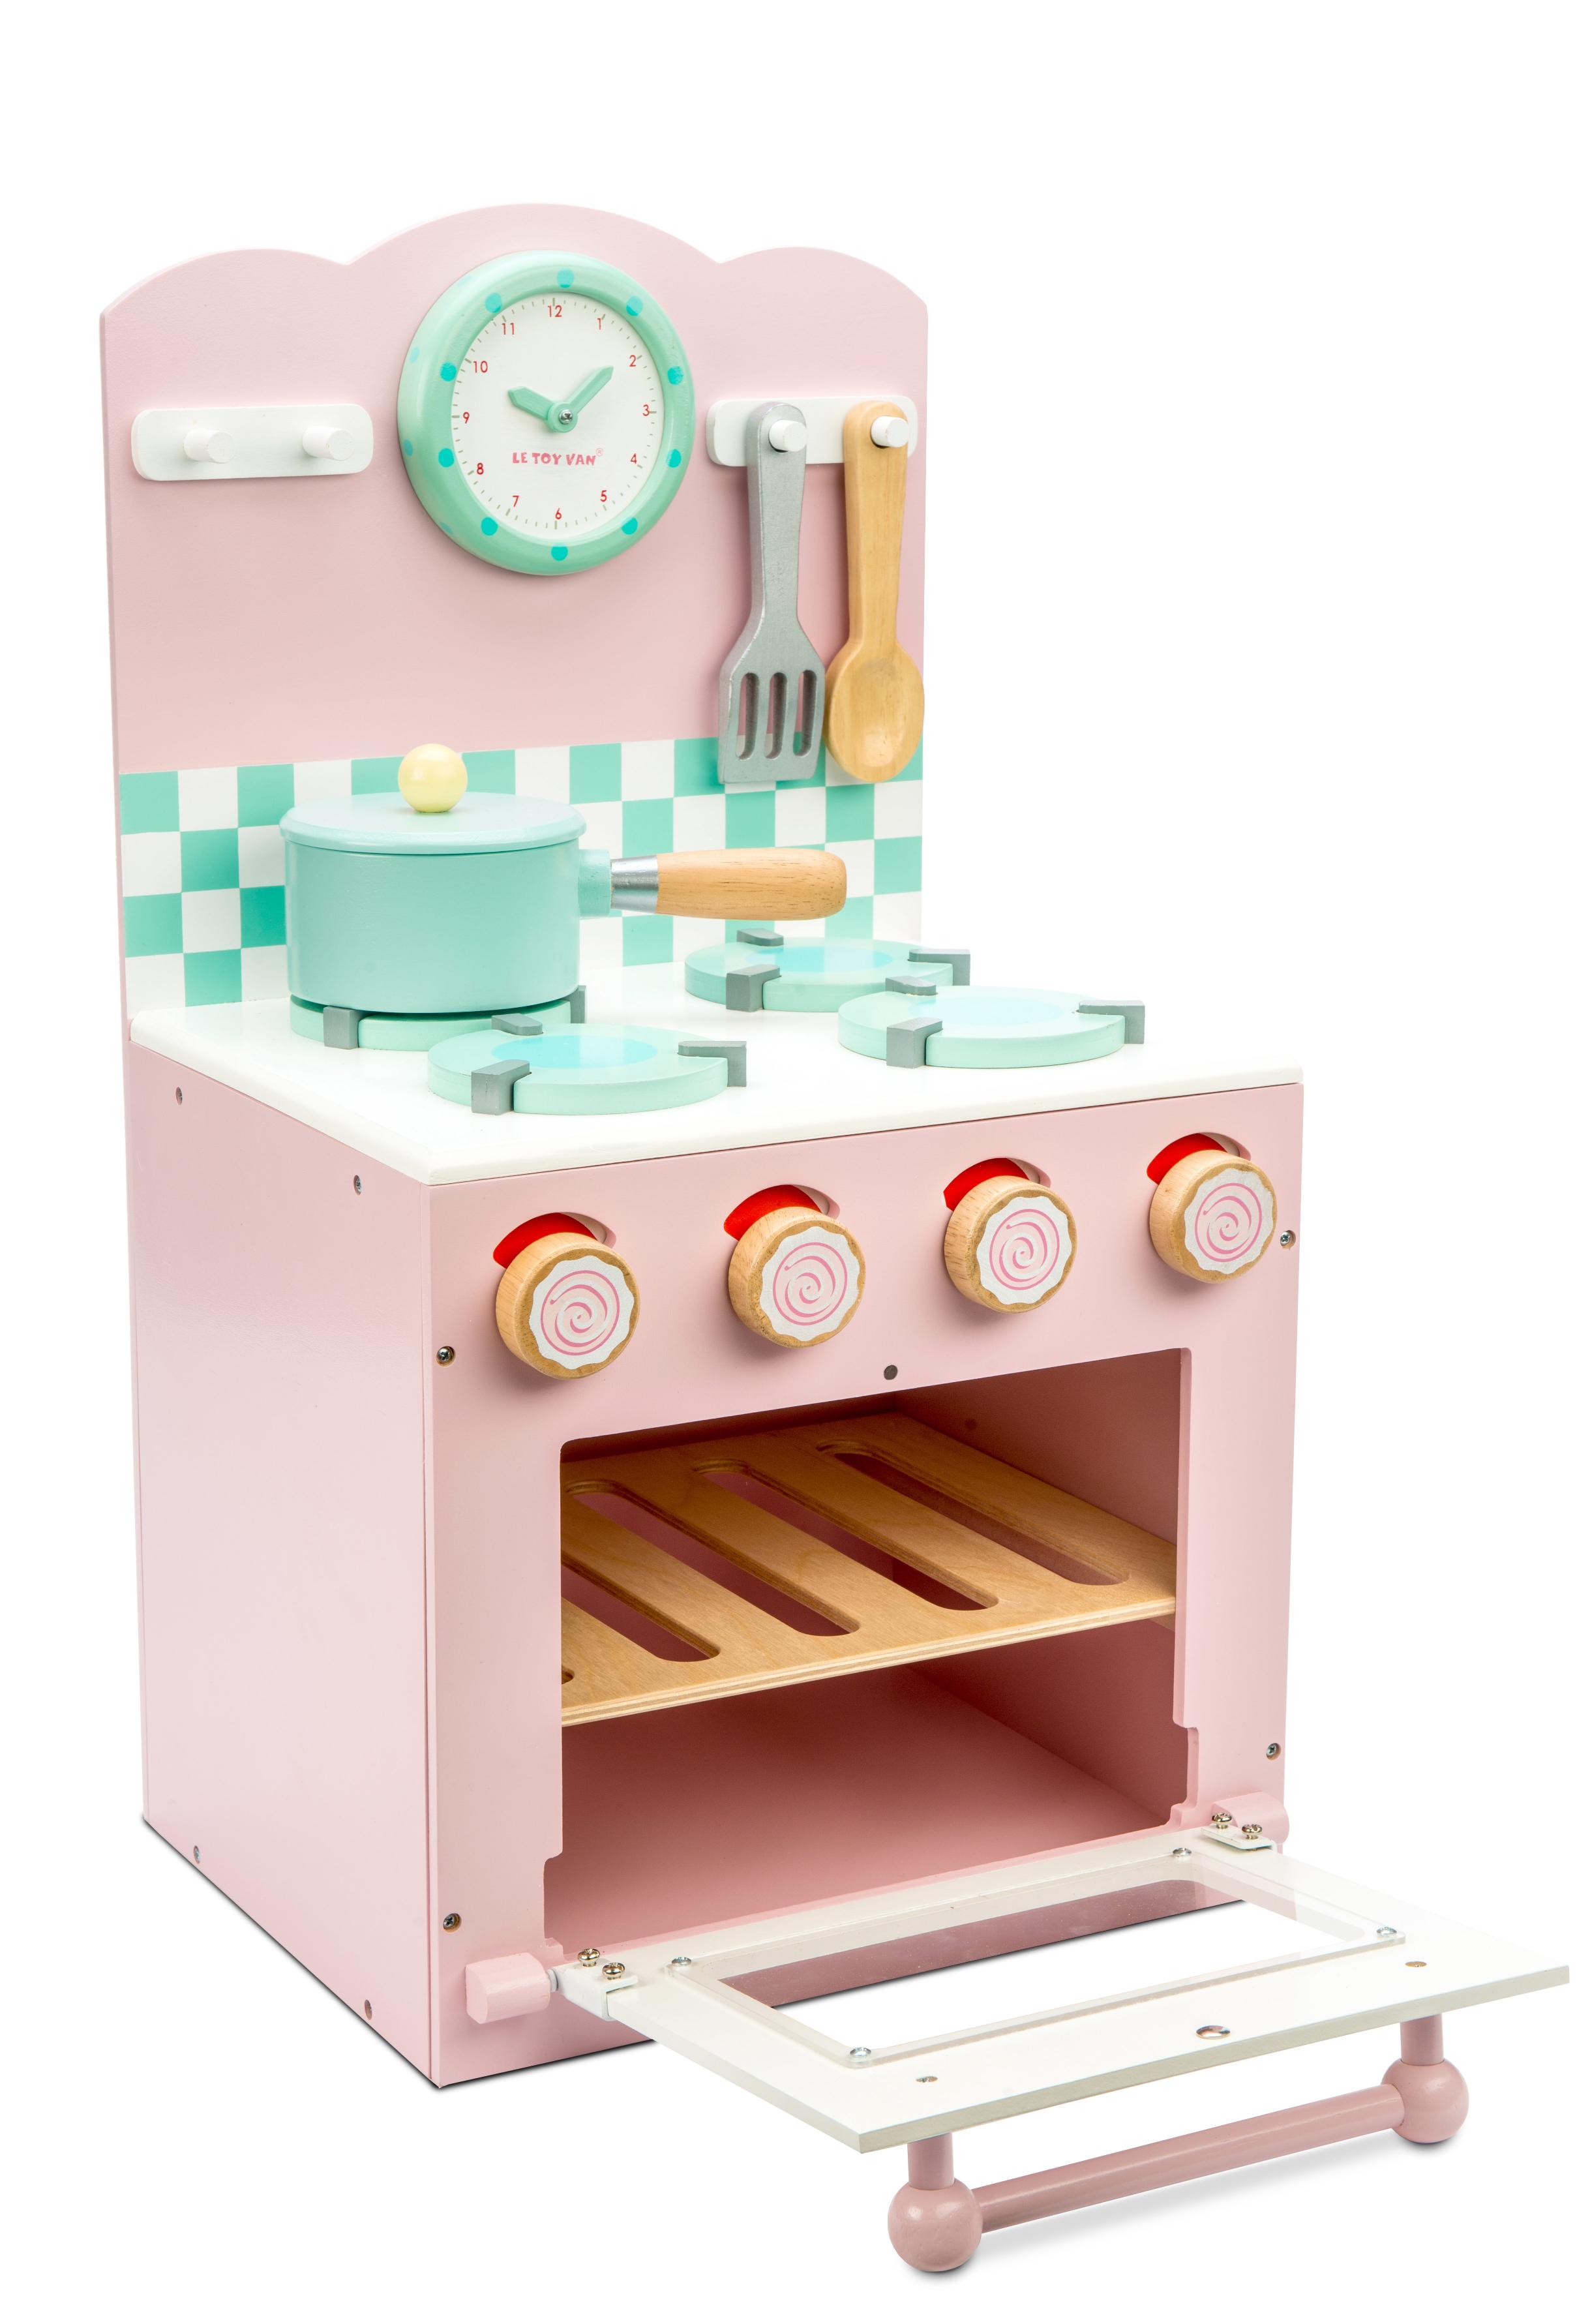 Le Toy Van Wooden Kitchen Playset - Oven & Hob Set (Pink)